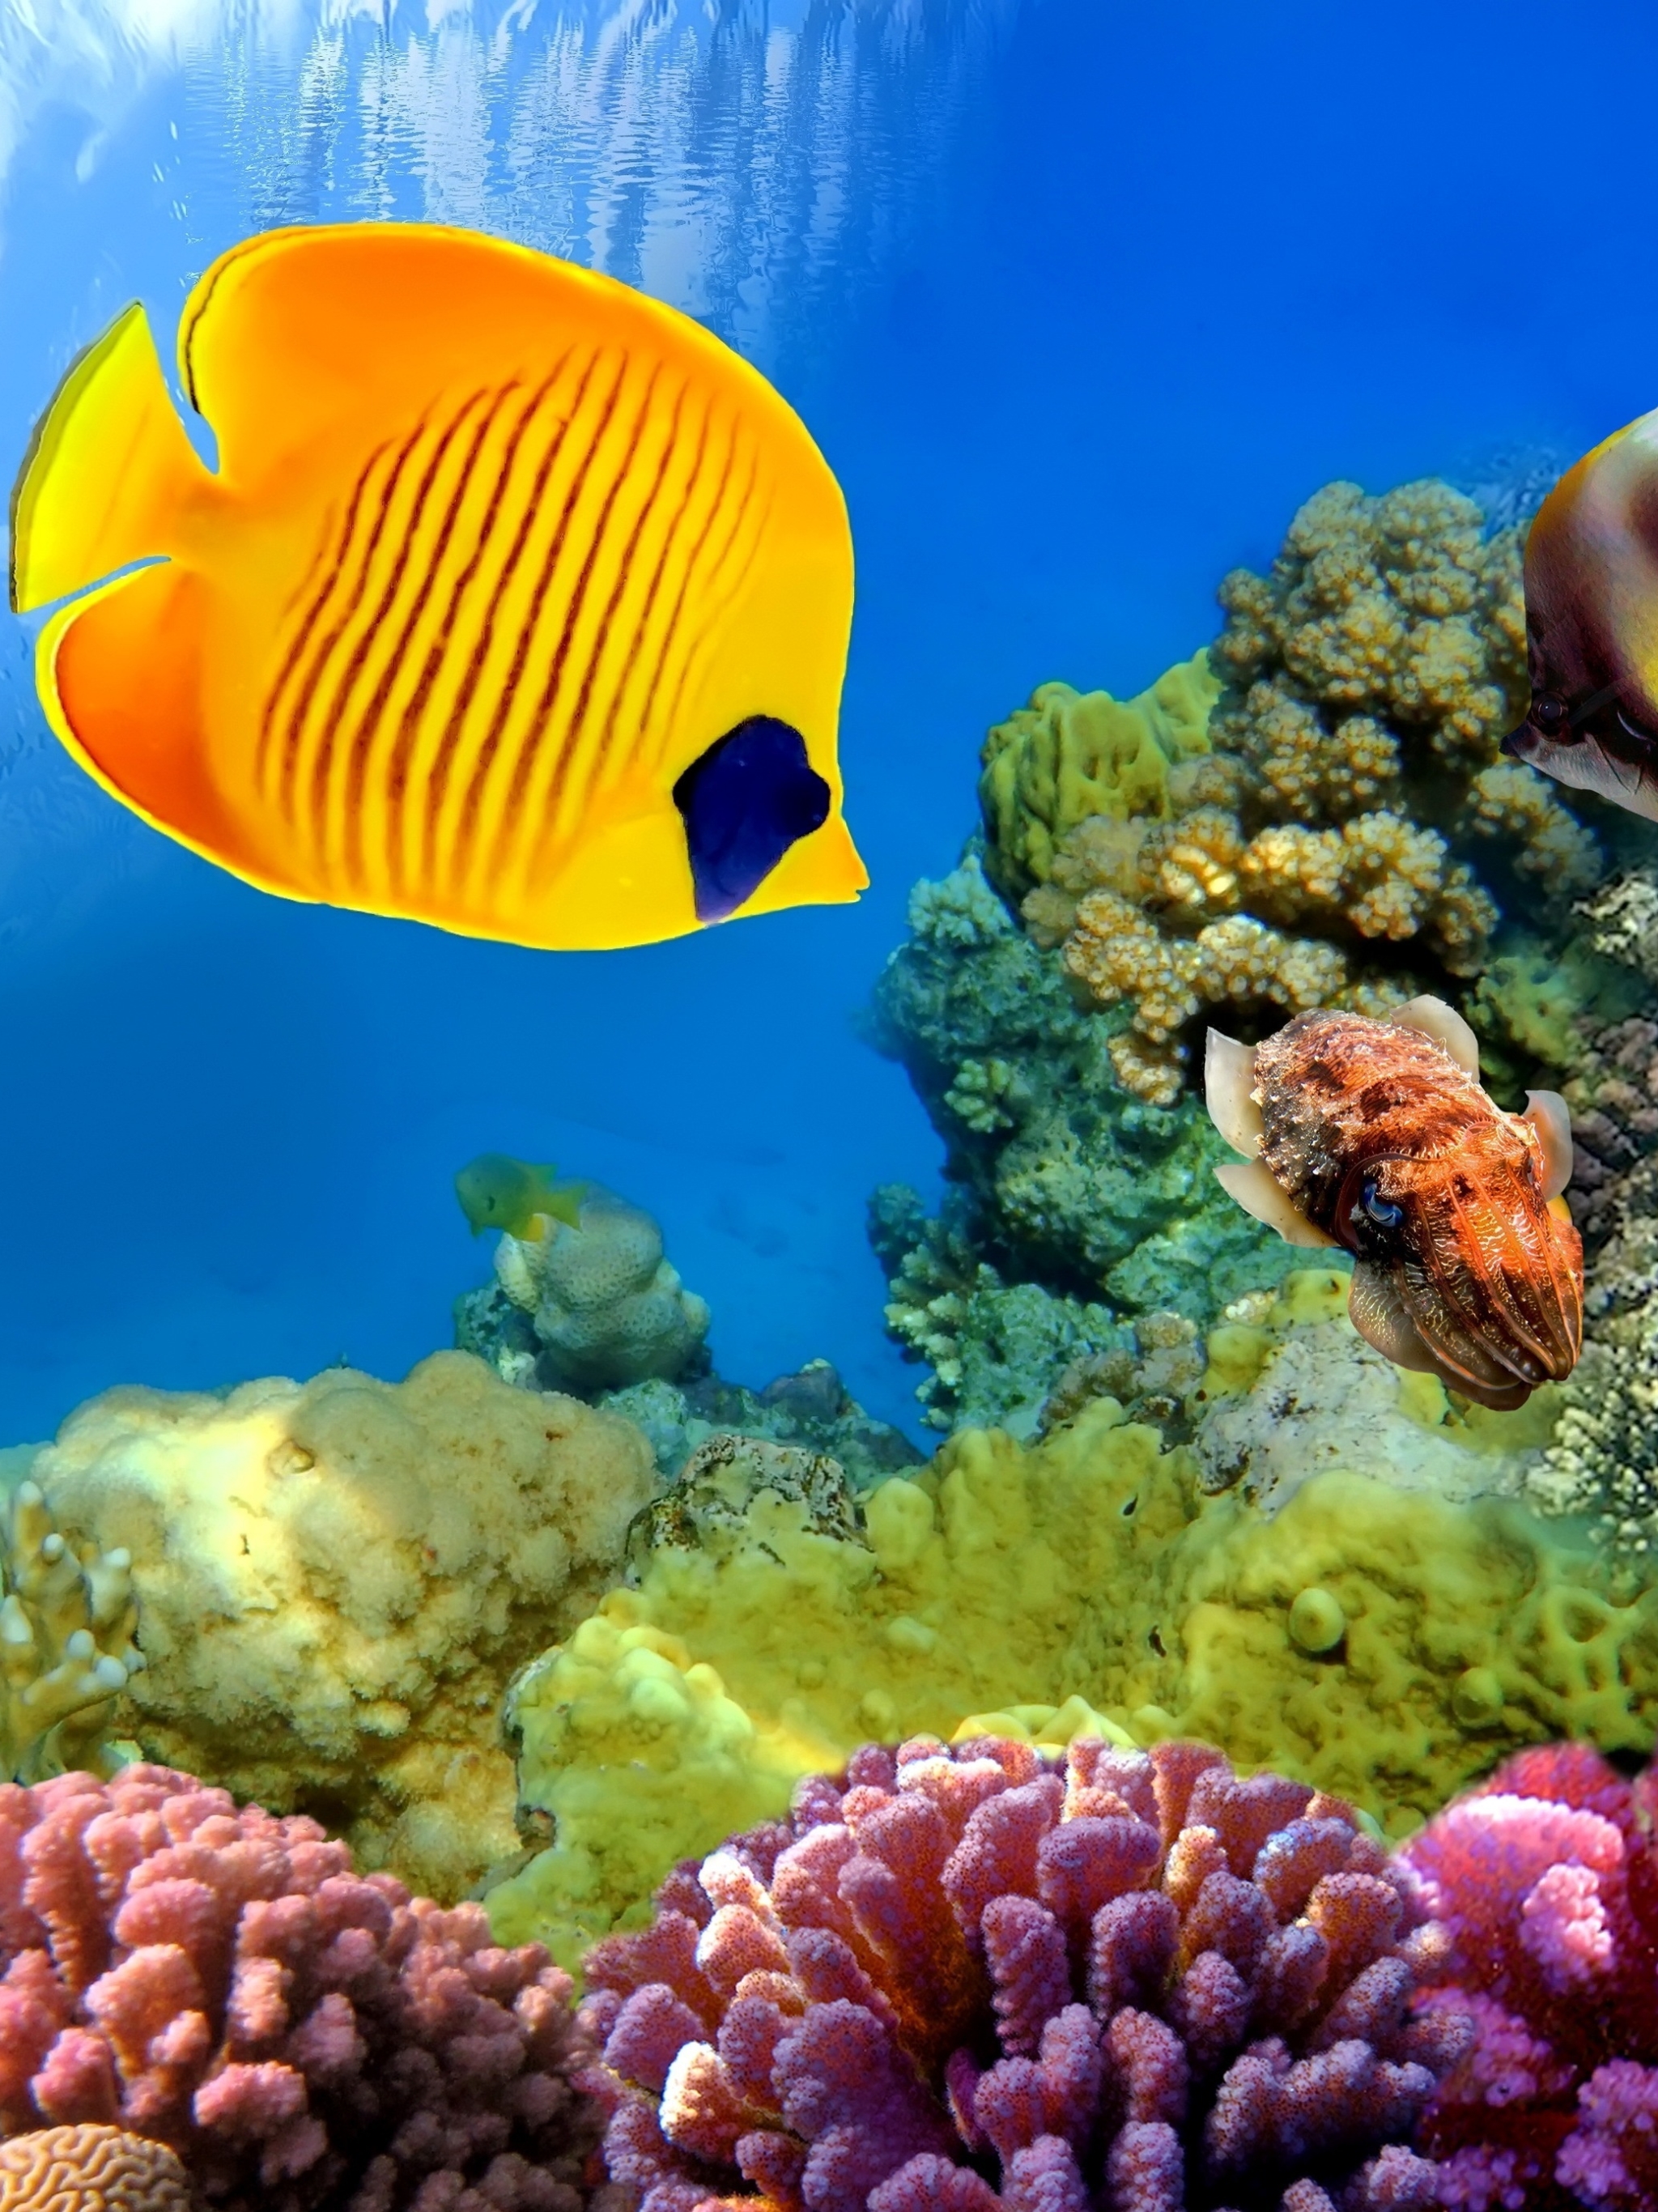 1177843 descargar imagen animales, pez, arrecife de coral, pez mariposa, submarino, submarina, peces: fondos de pantalla y protectores de pantalla gratis